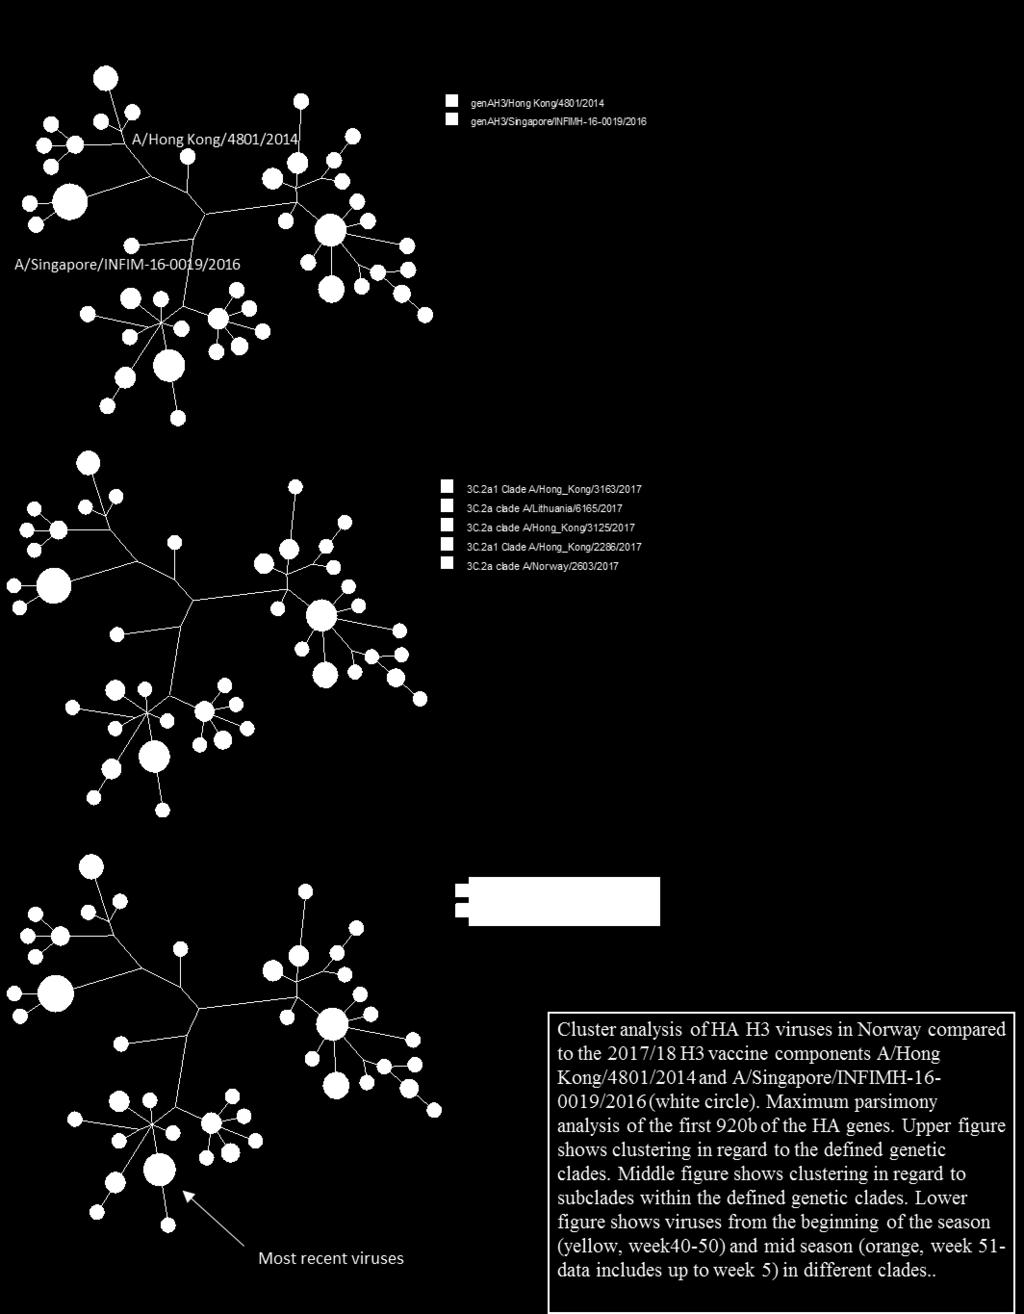 Figure 9: Cluster analysis of H3 viruses